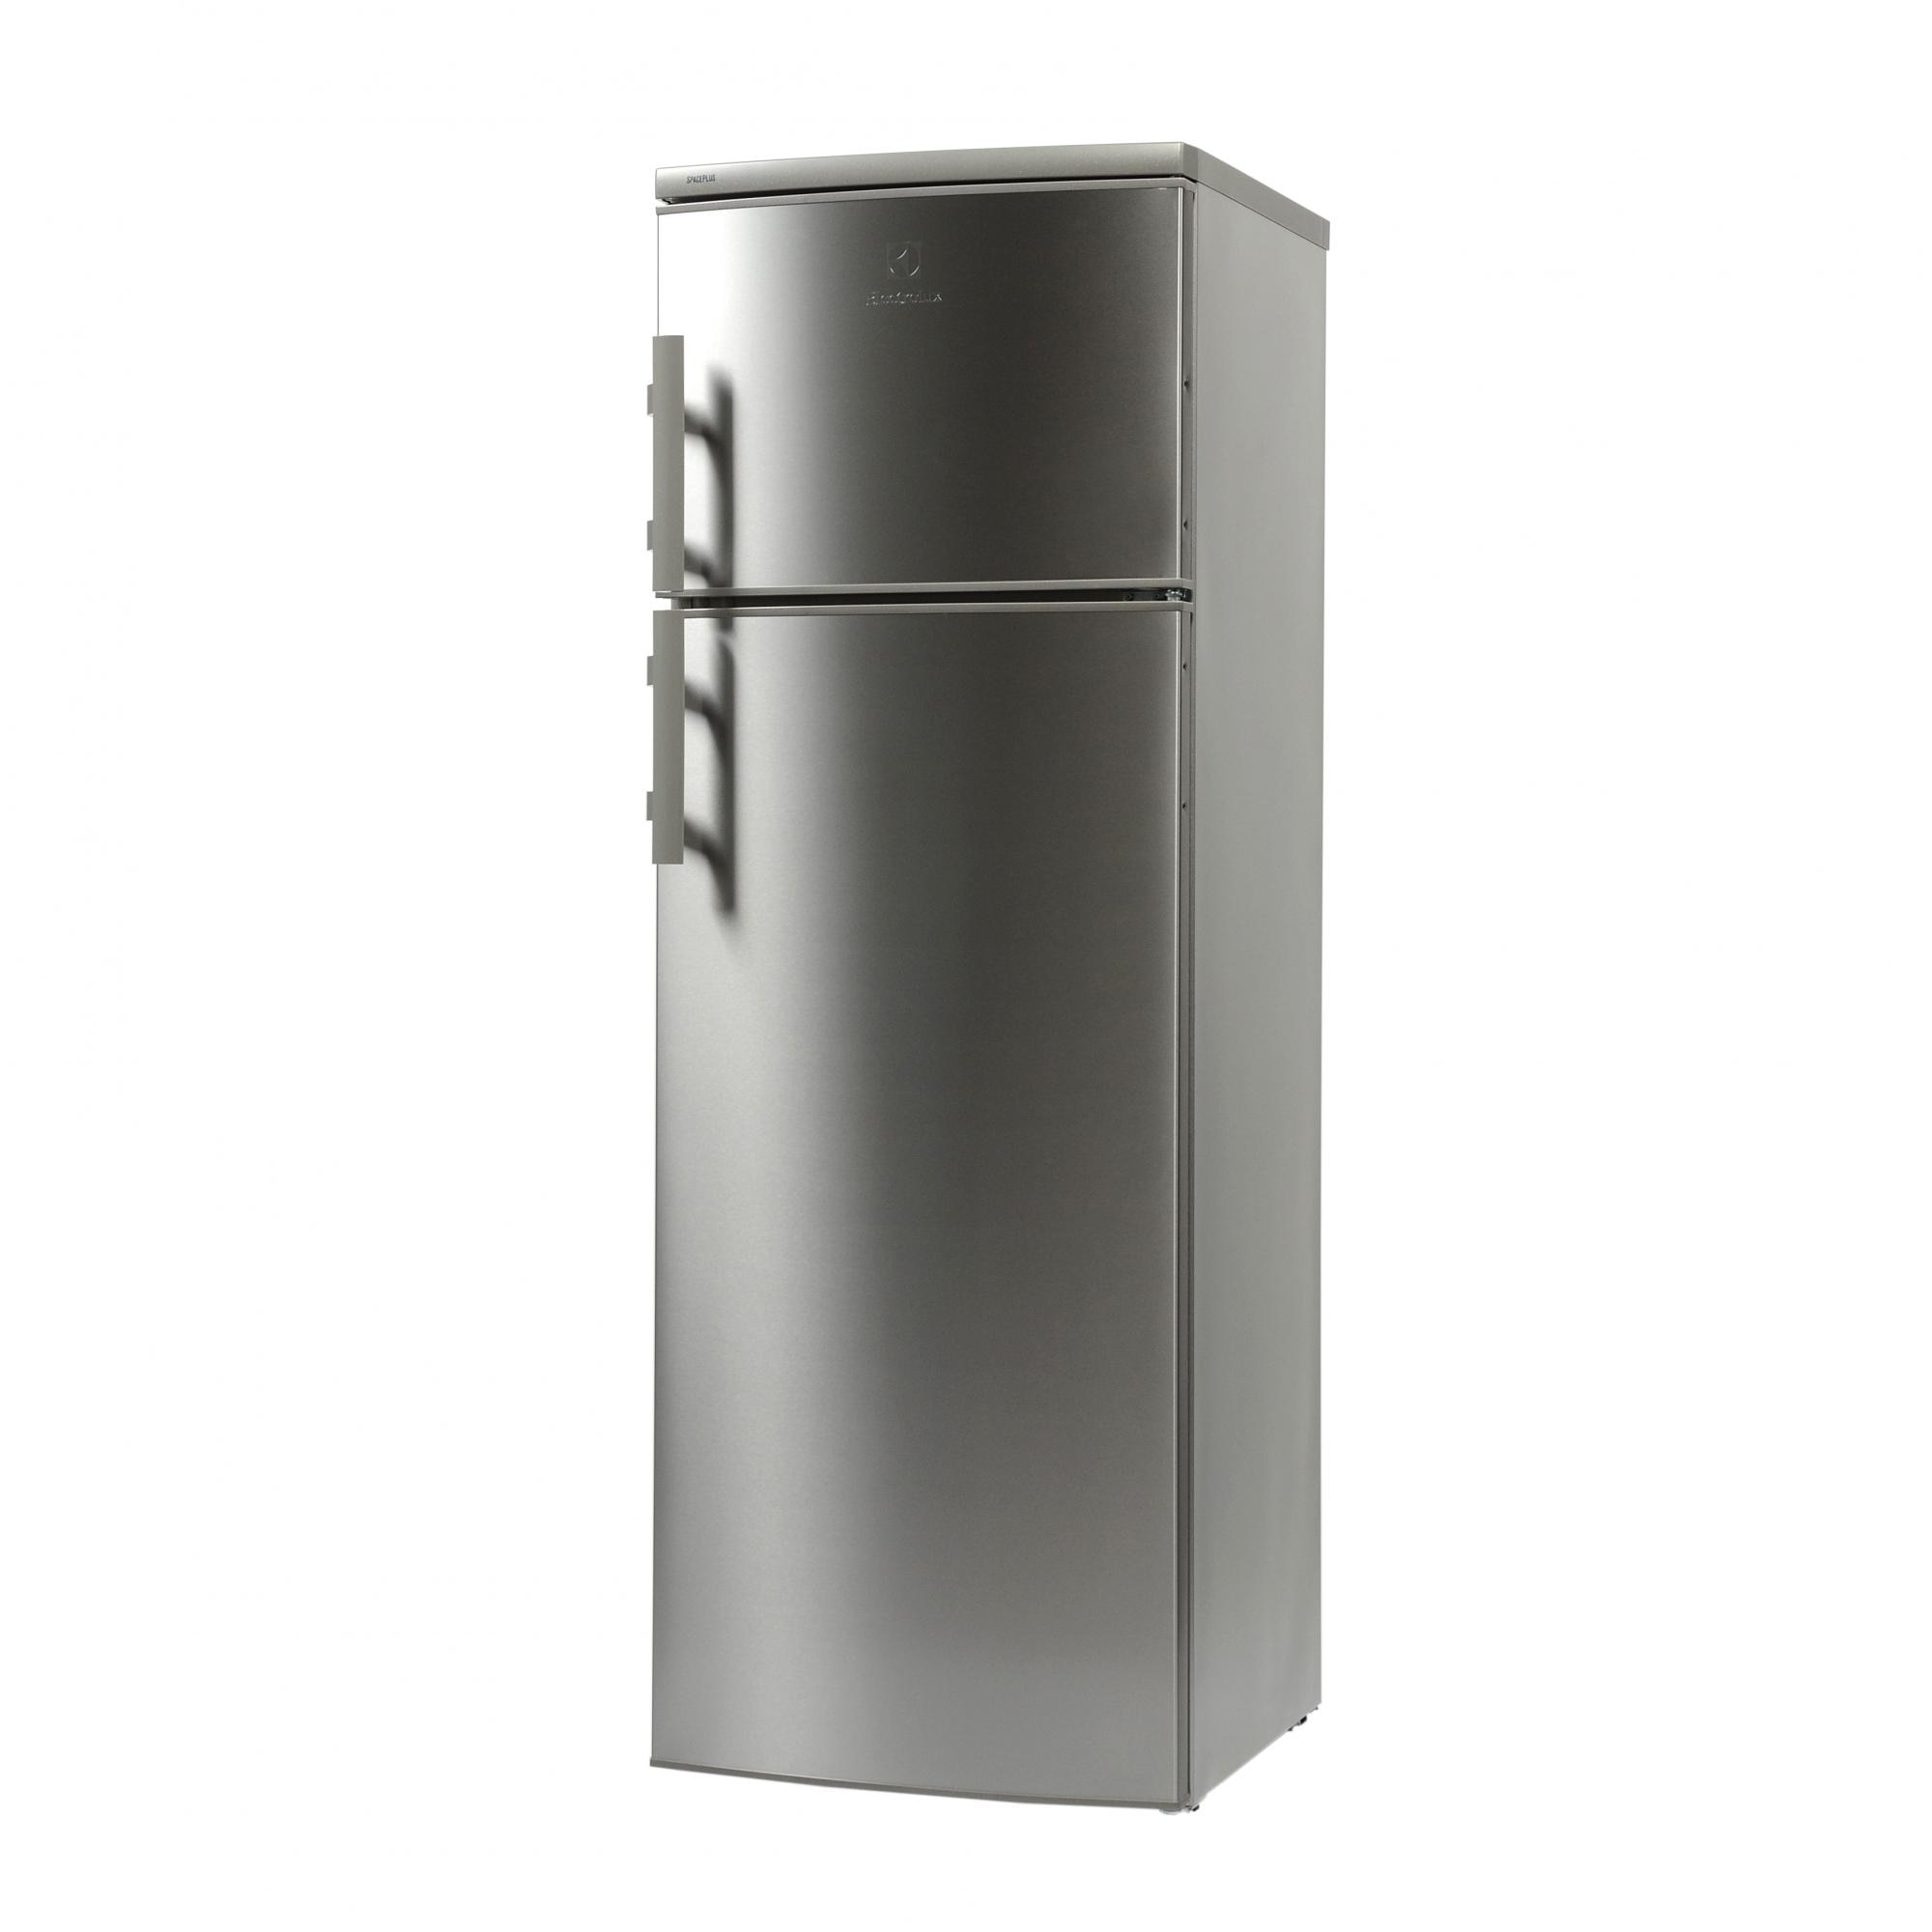 Хладилник Electrolux EJ2801AOX2 с обем от 265 л.